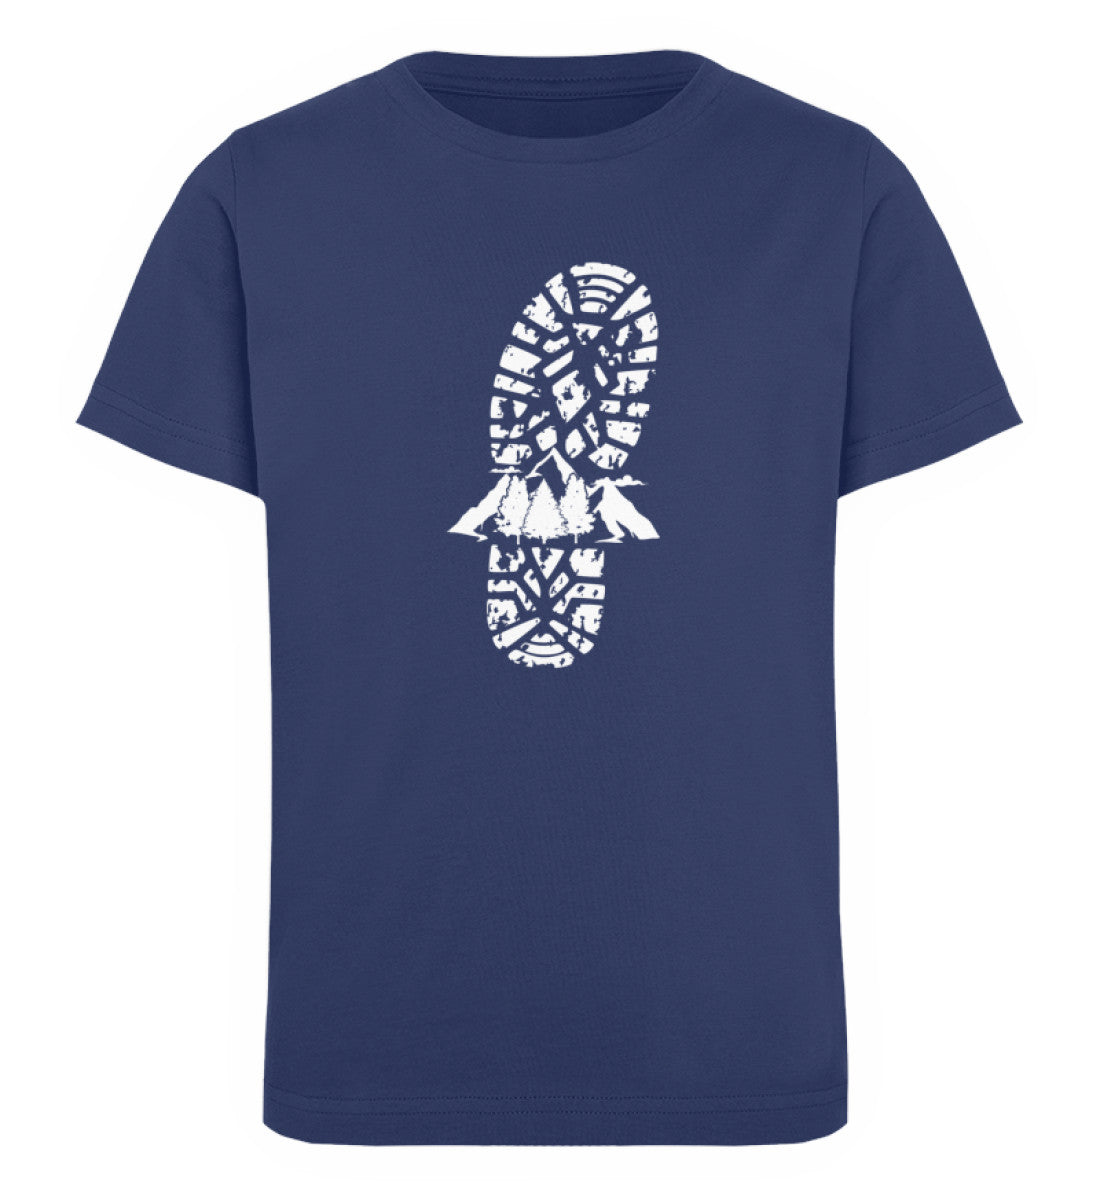 Berge und Wanderschuh Abdruck - Kinder Premium Organic T-Shirt berge wandern Navyblau